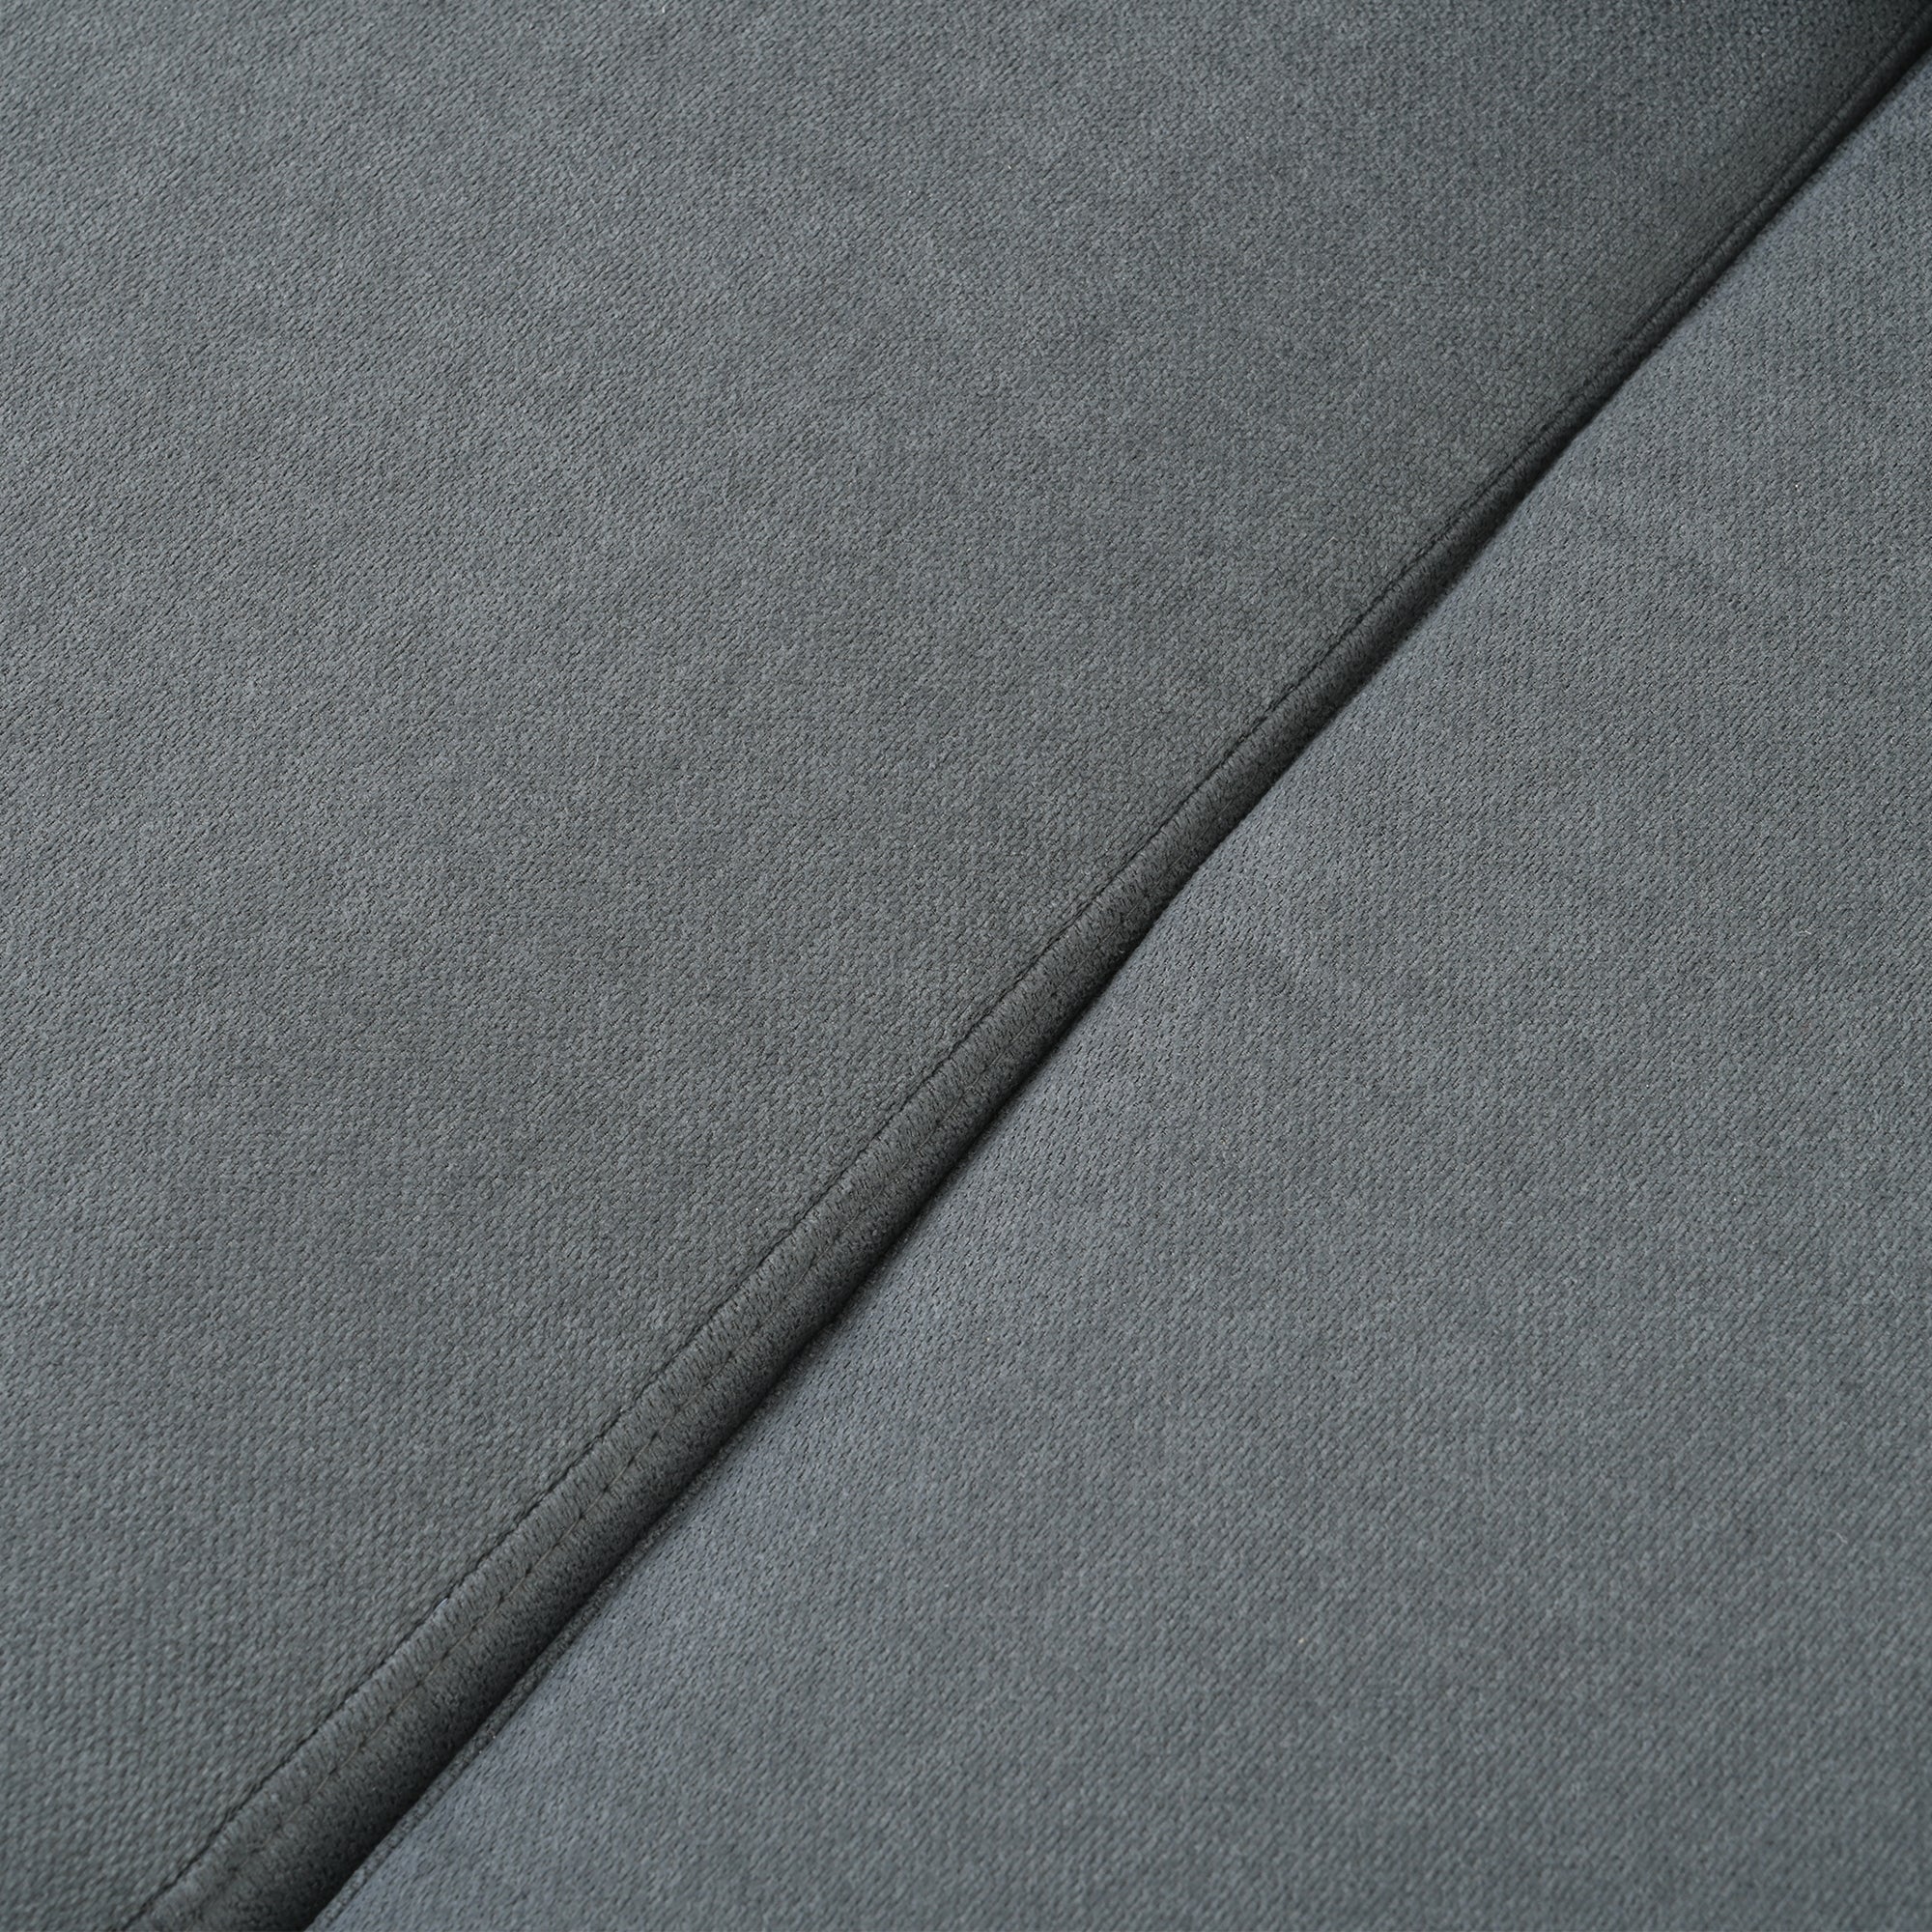 Collin 91" Linen Fabric Modular 3 Seater Sofa